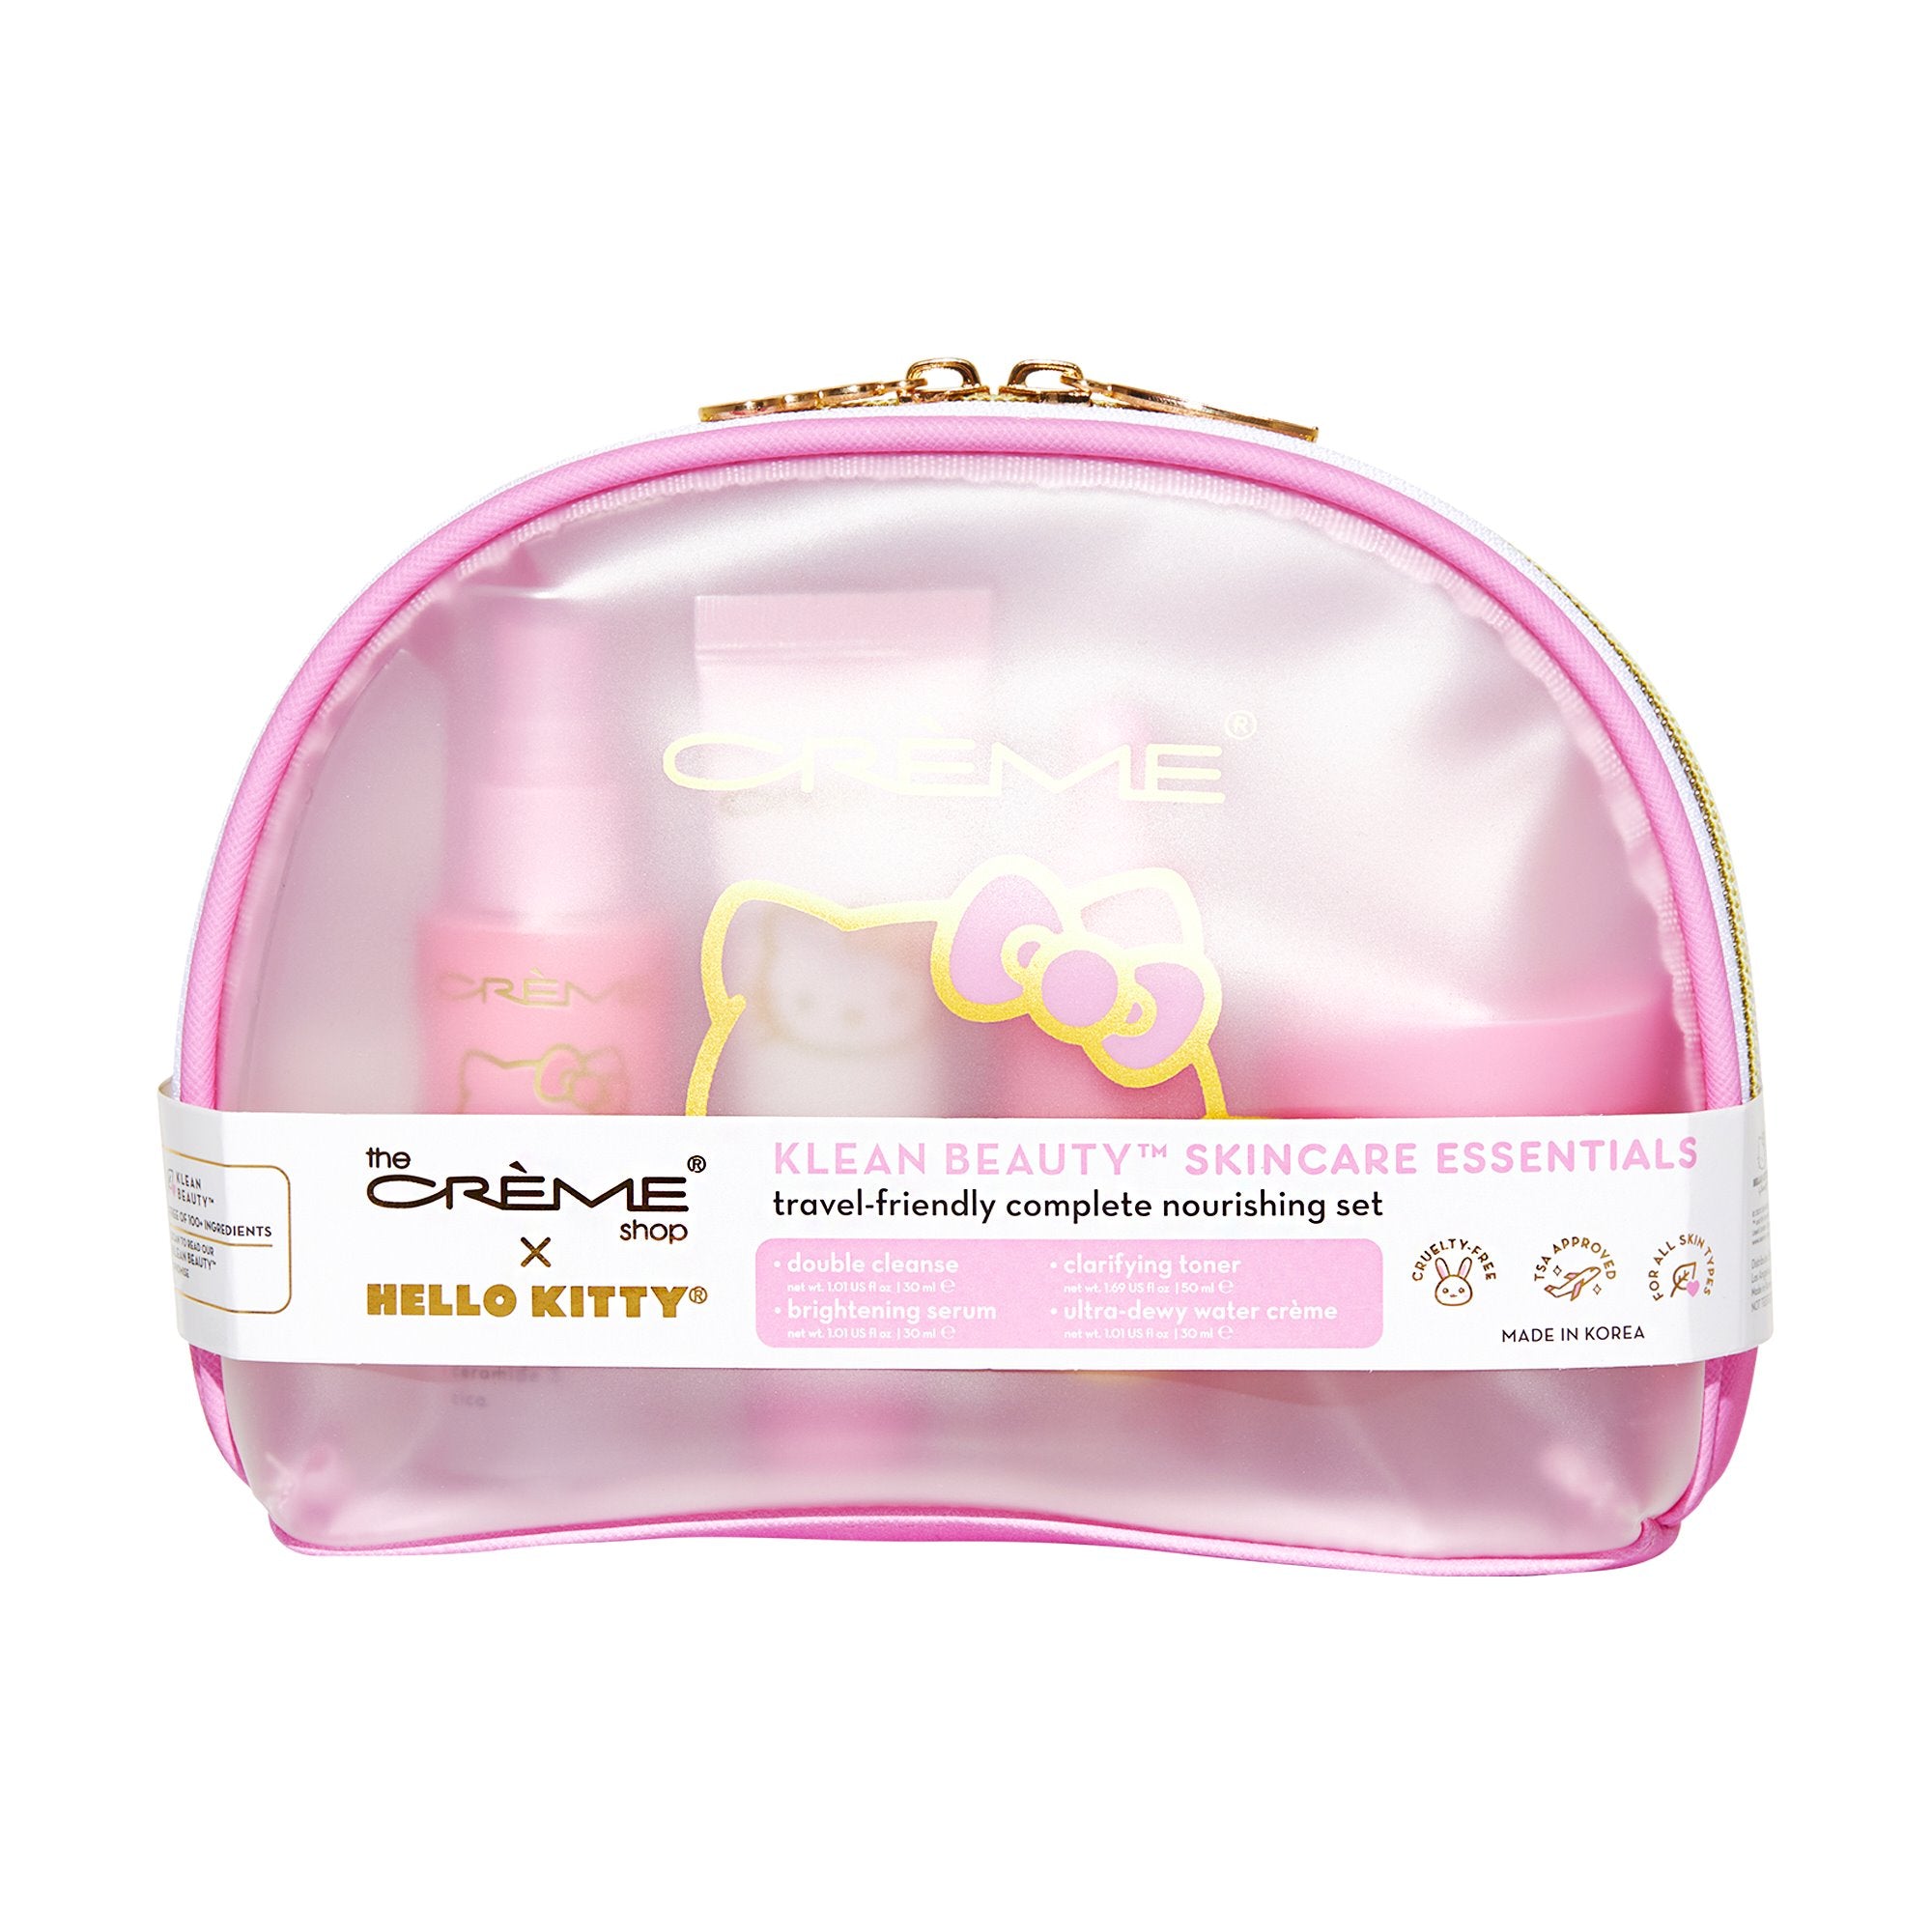 The Crème Shop x Hello Kitty Skincare Essentials - Klean Beauty™ 4PC Travel Bag Set Skin Care The Crème Shop x Sanrio 